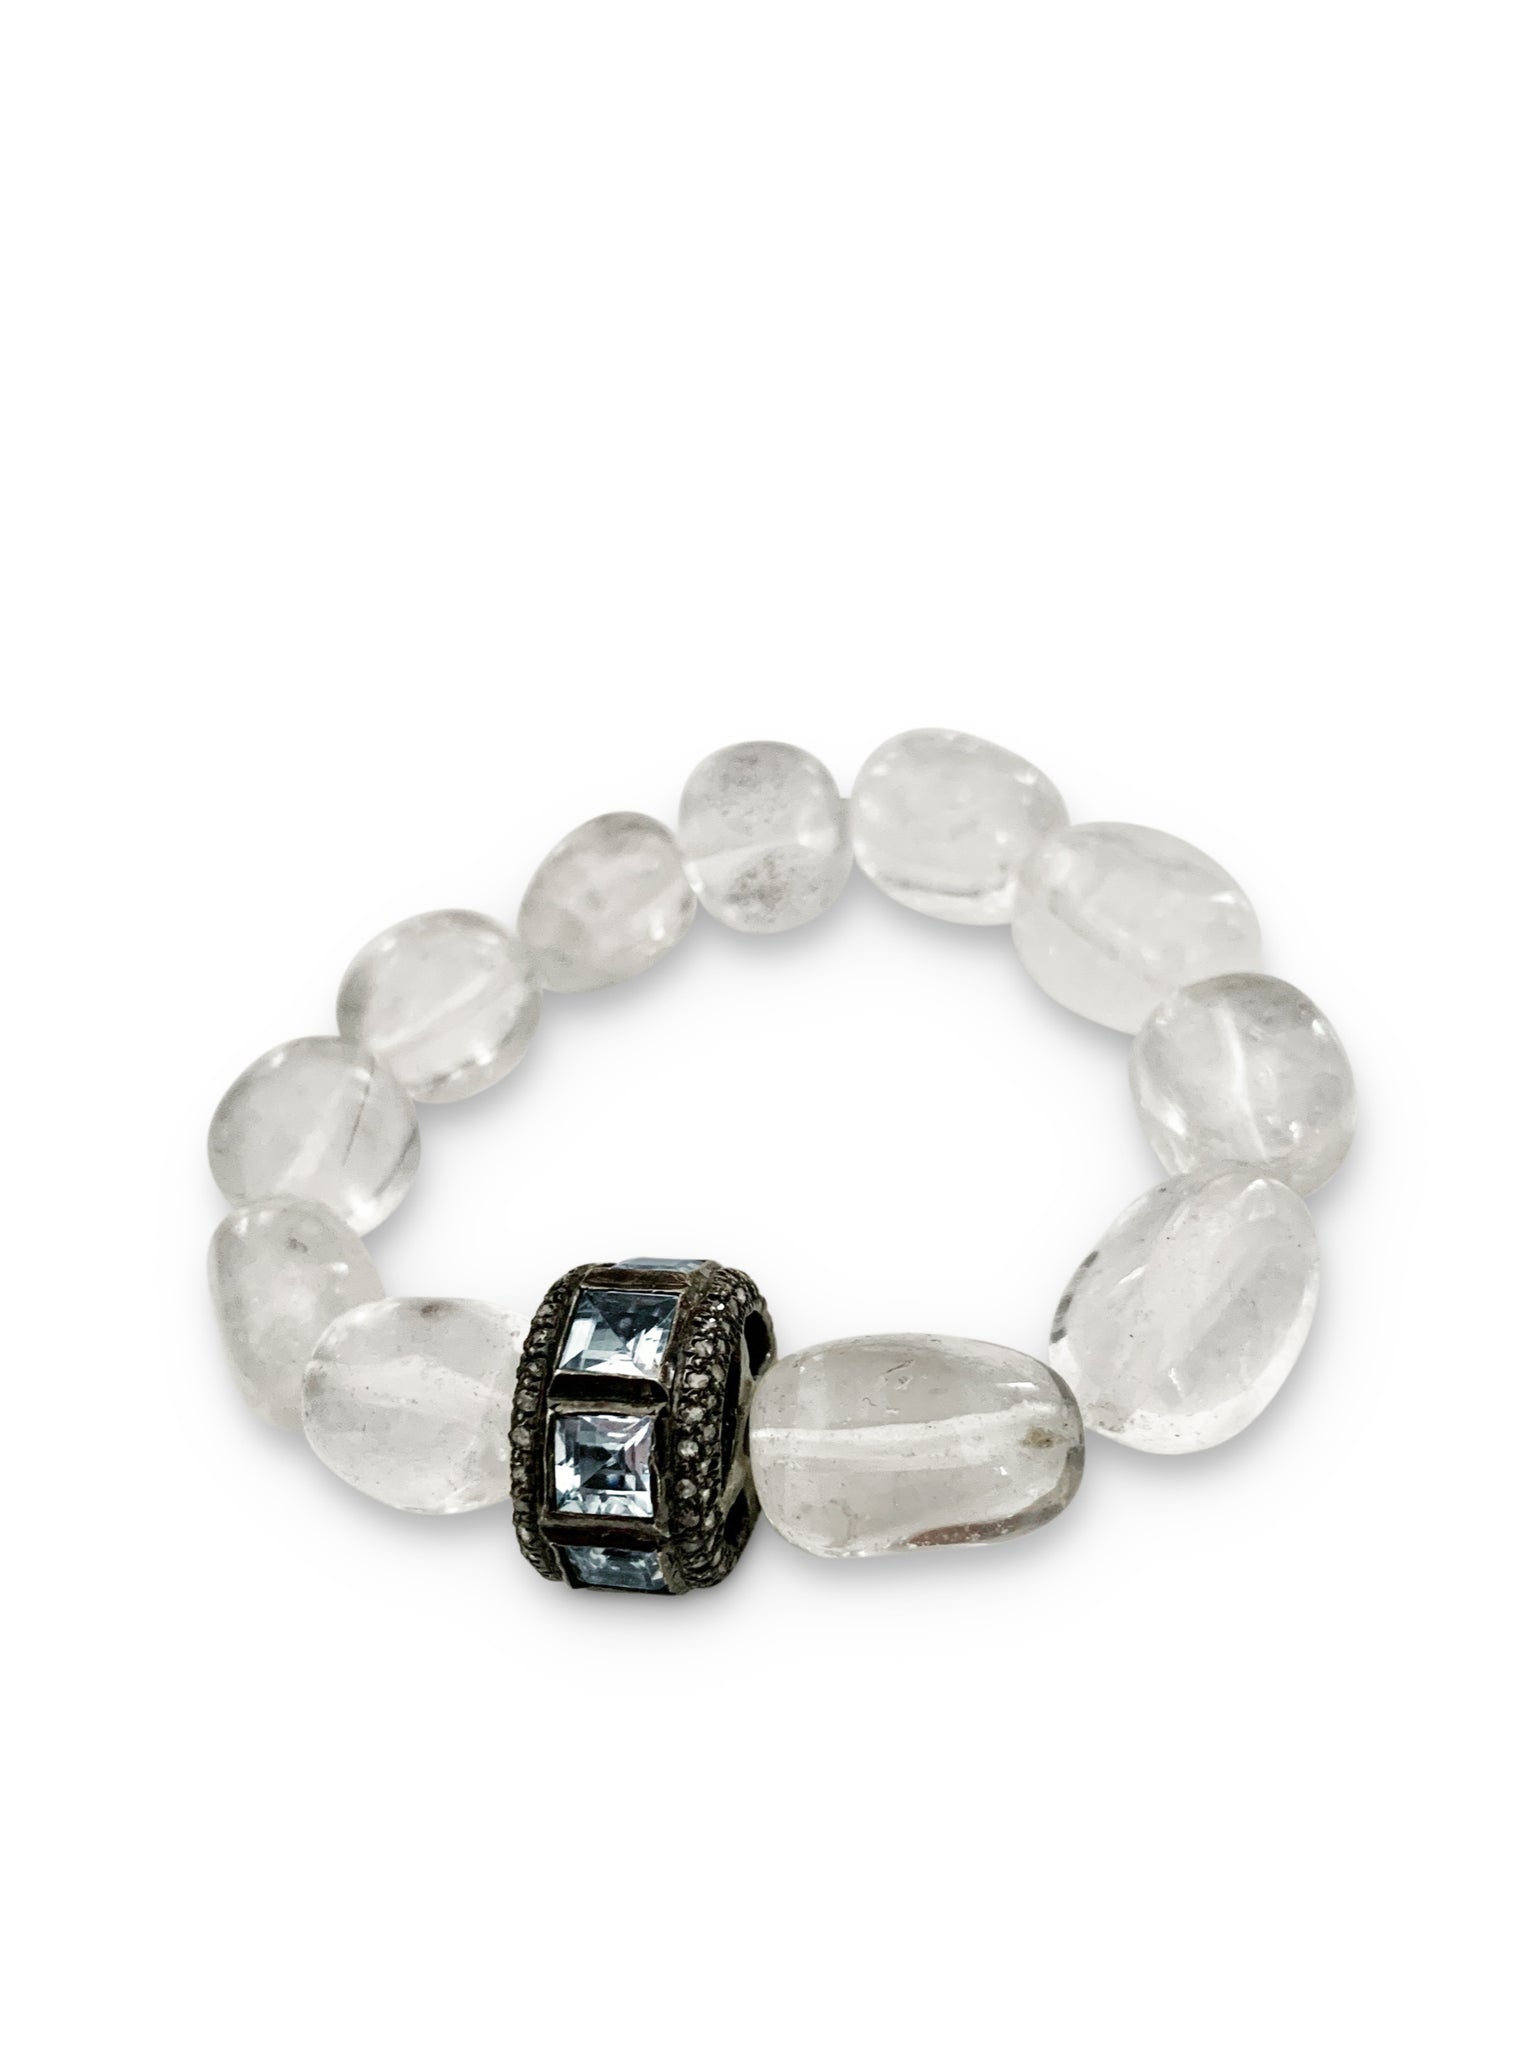 Clear Crystal Quartz with Aquamarine and Pave Diamond Bead